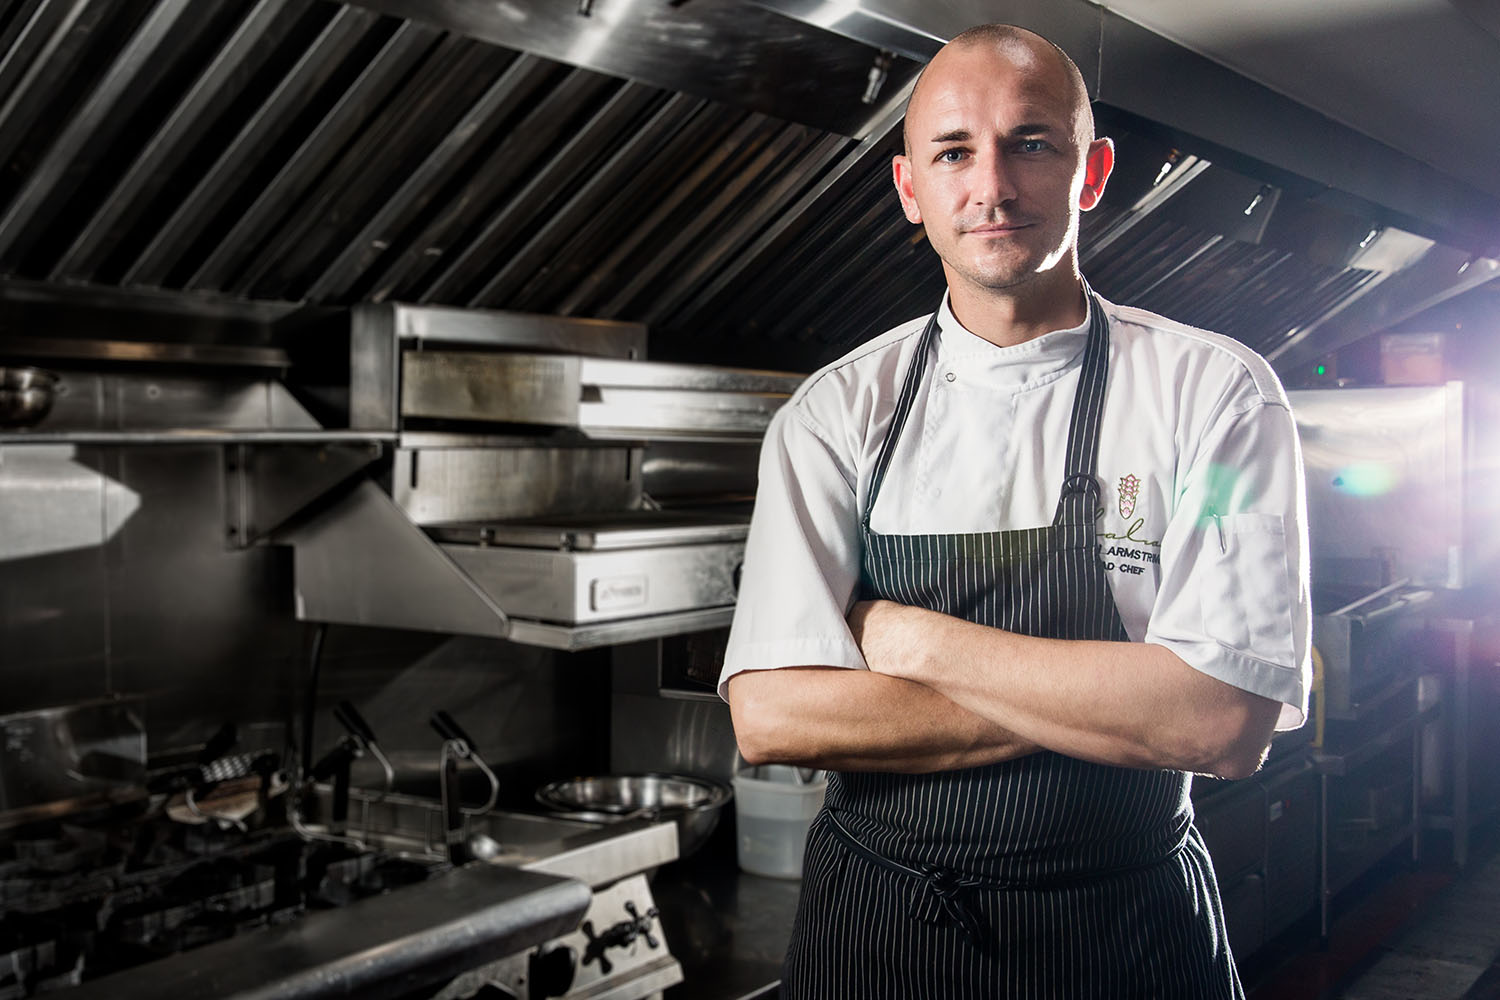 Menu innovation at Halia is led by Executive Chef Ciaran Armstrong.